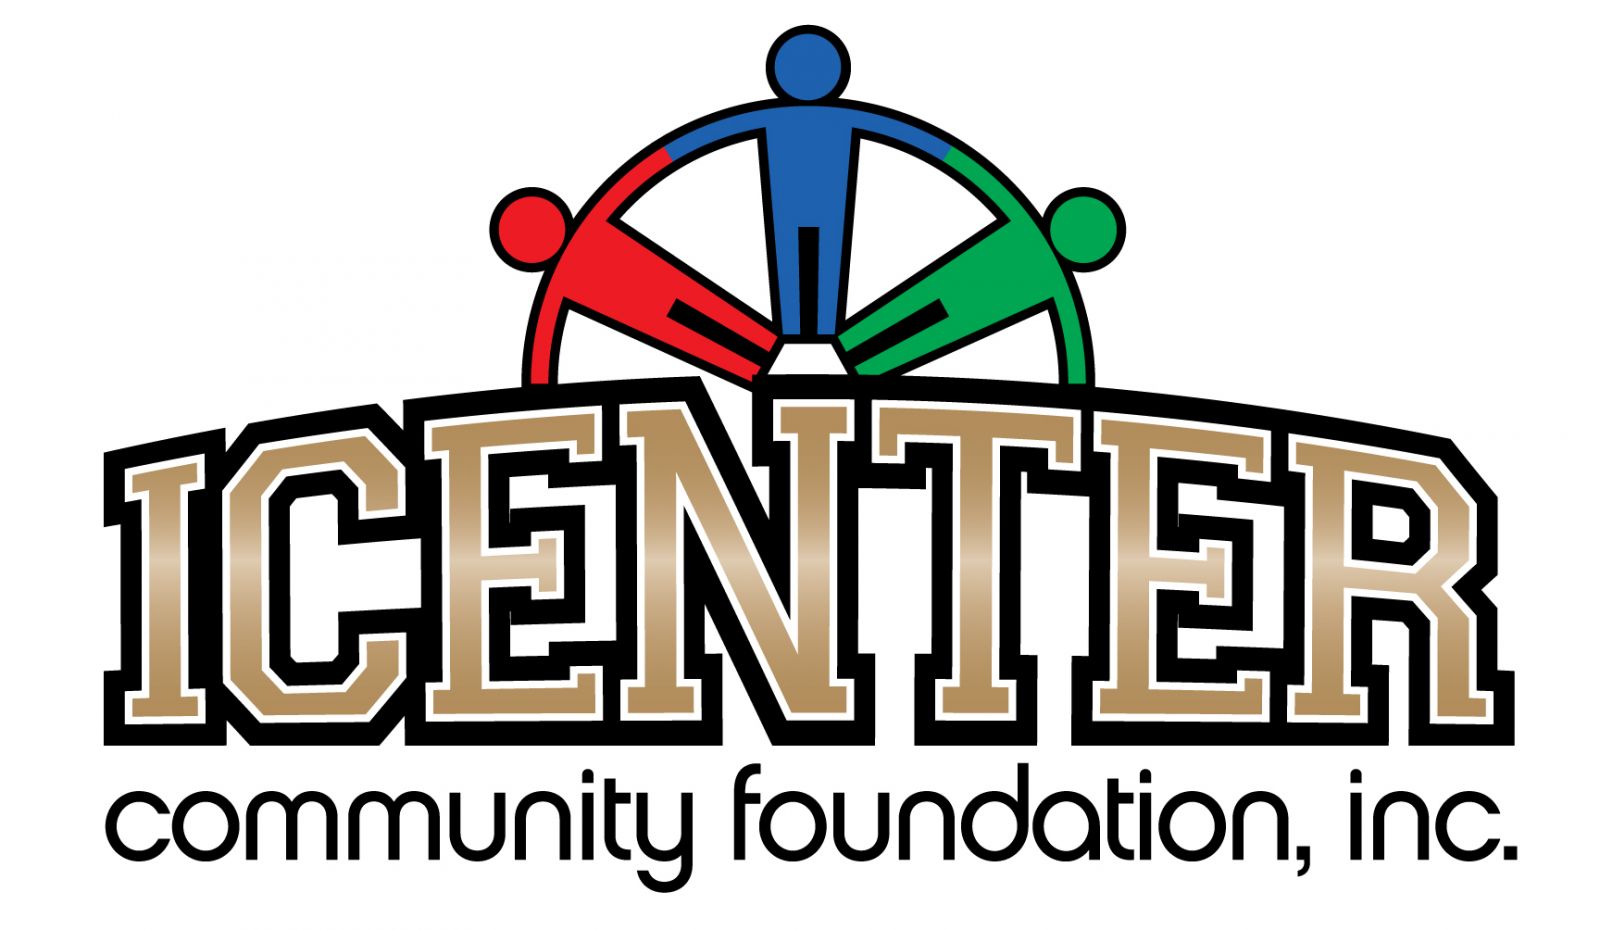 iCenter Foundation